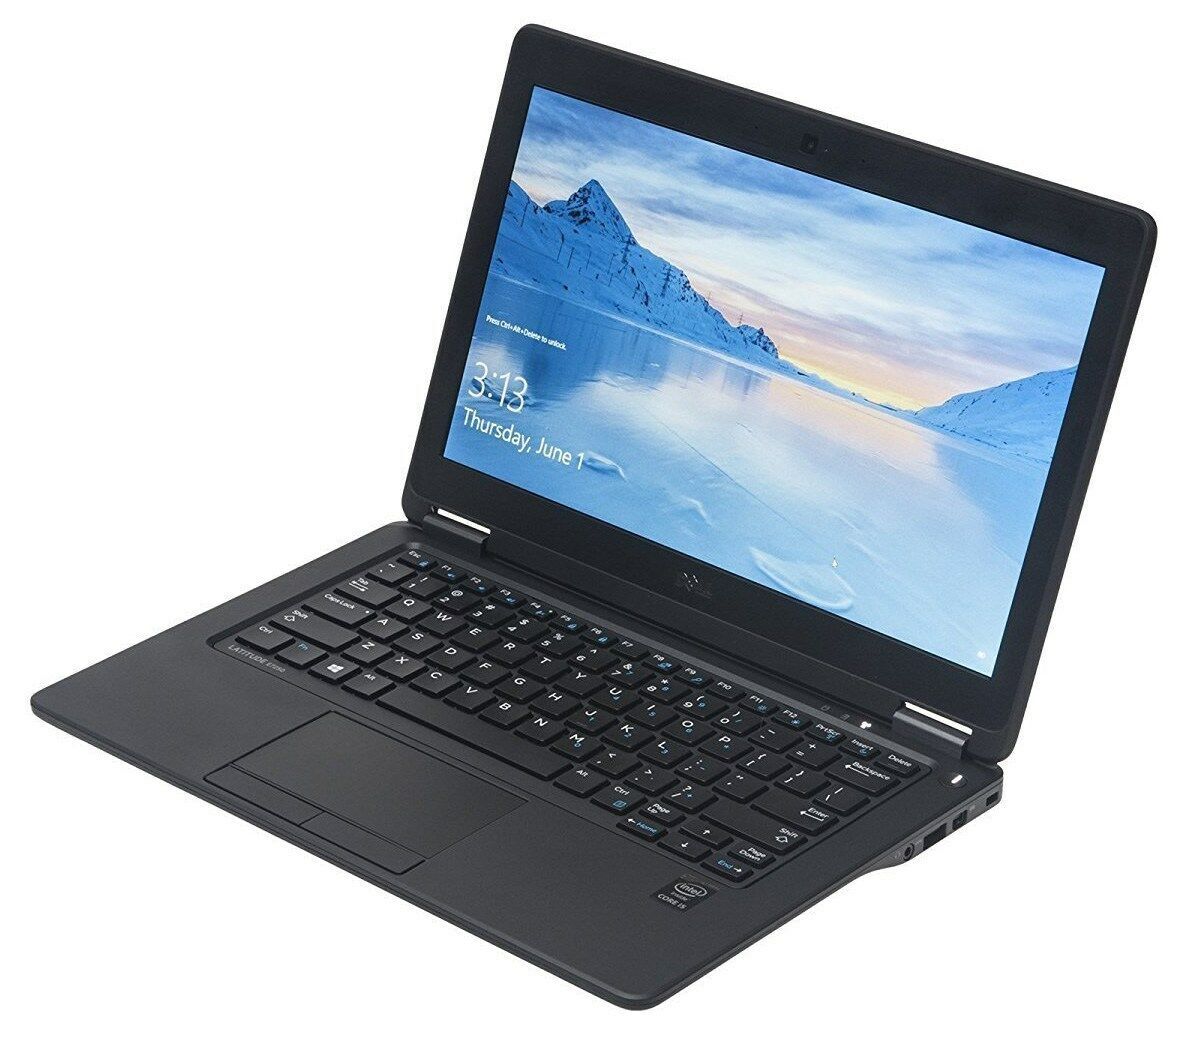 Dell Latitude E7250 i7 5600u 2.6Ghz 8GB RAM 128GB SSD 12.5" Ultrabook NO OS Full Size Image